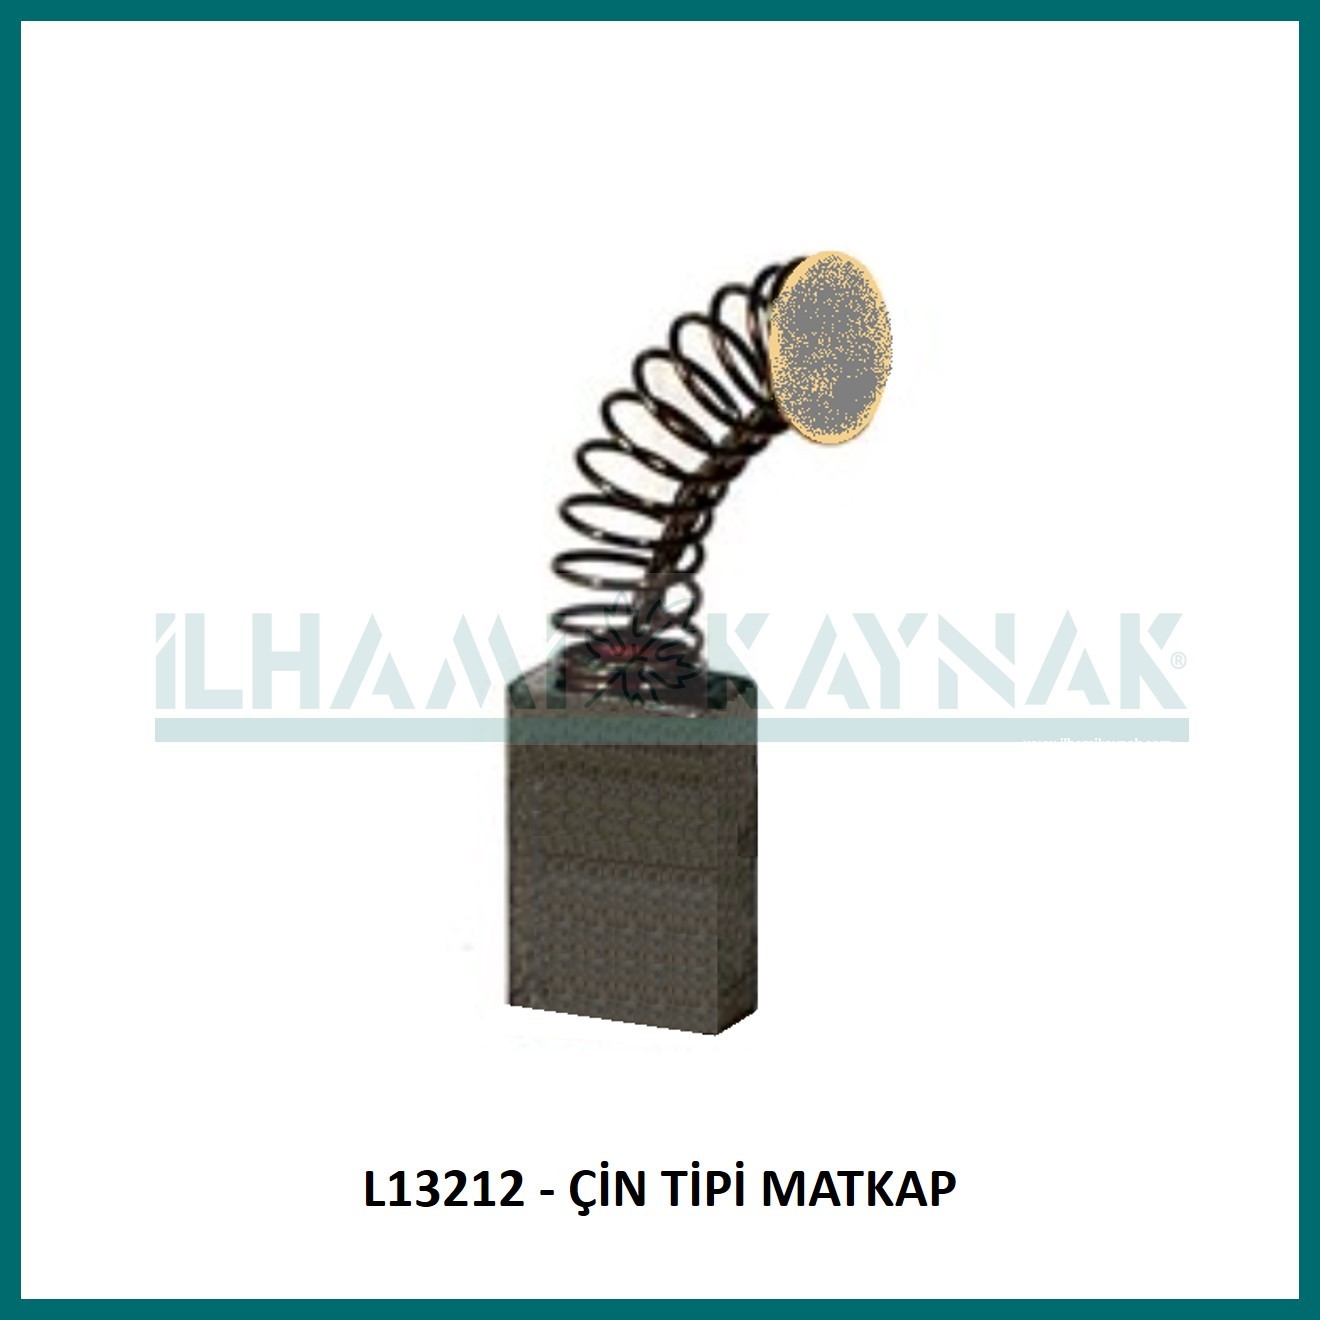 L13211 - ÇİN TİPİ MATKAP KÖMÜRÜ - 6*11*20 mm - Minimum Satın Alım: 10 Adet